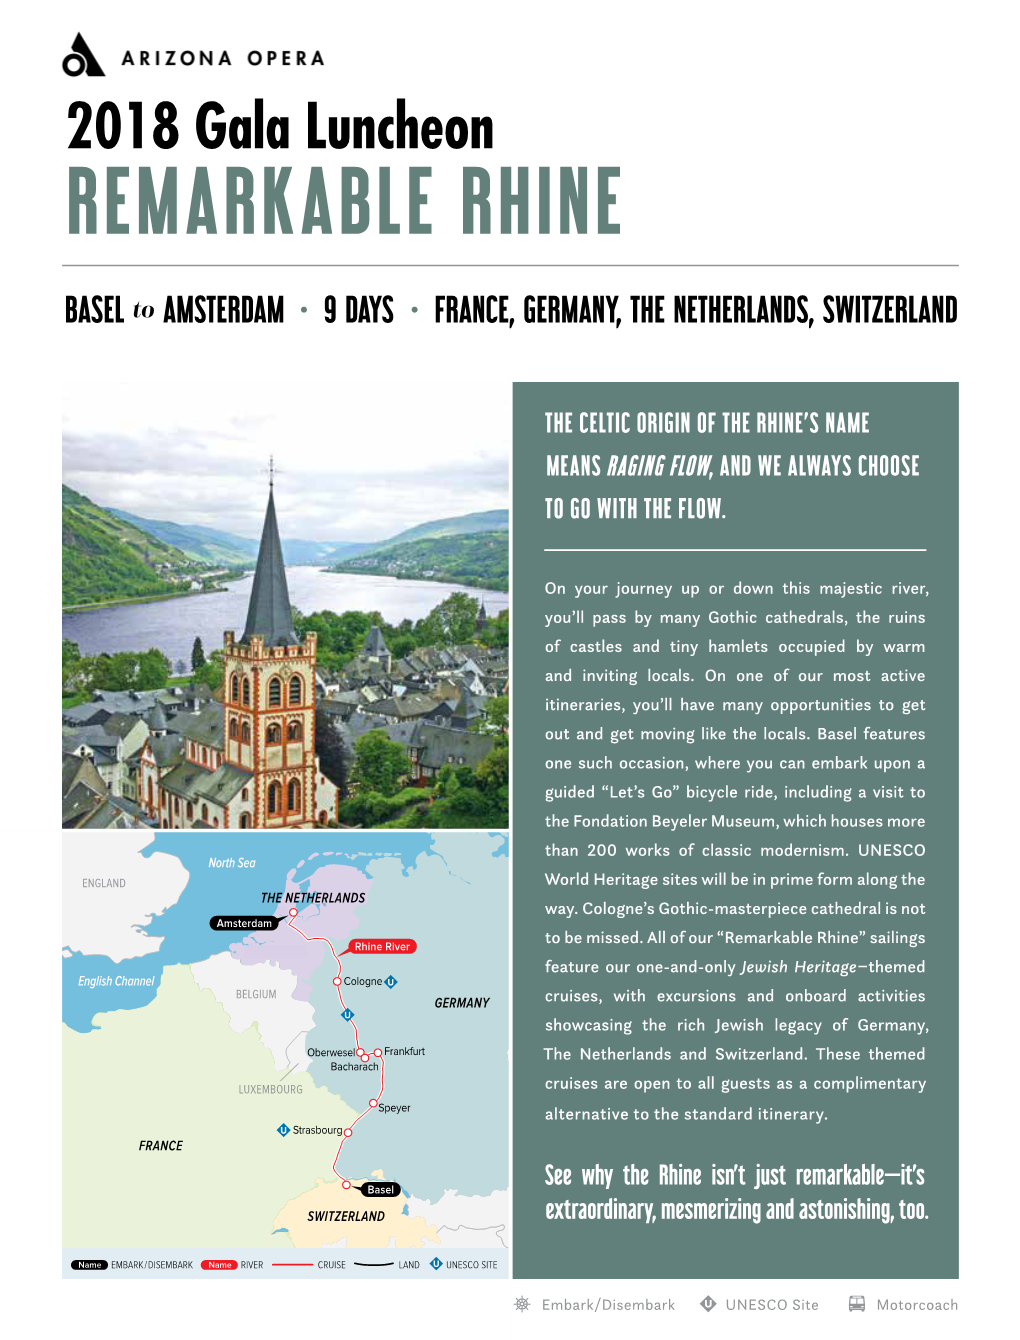 Remarkable Rhine